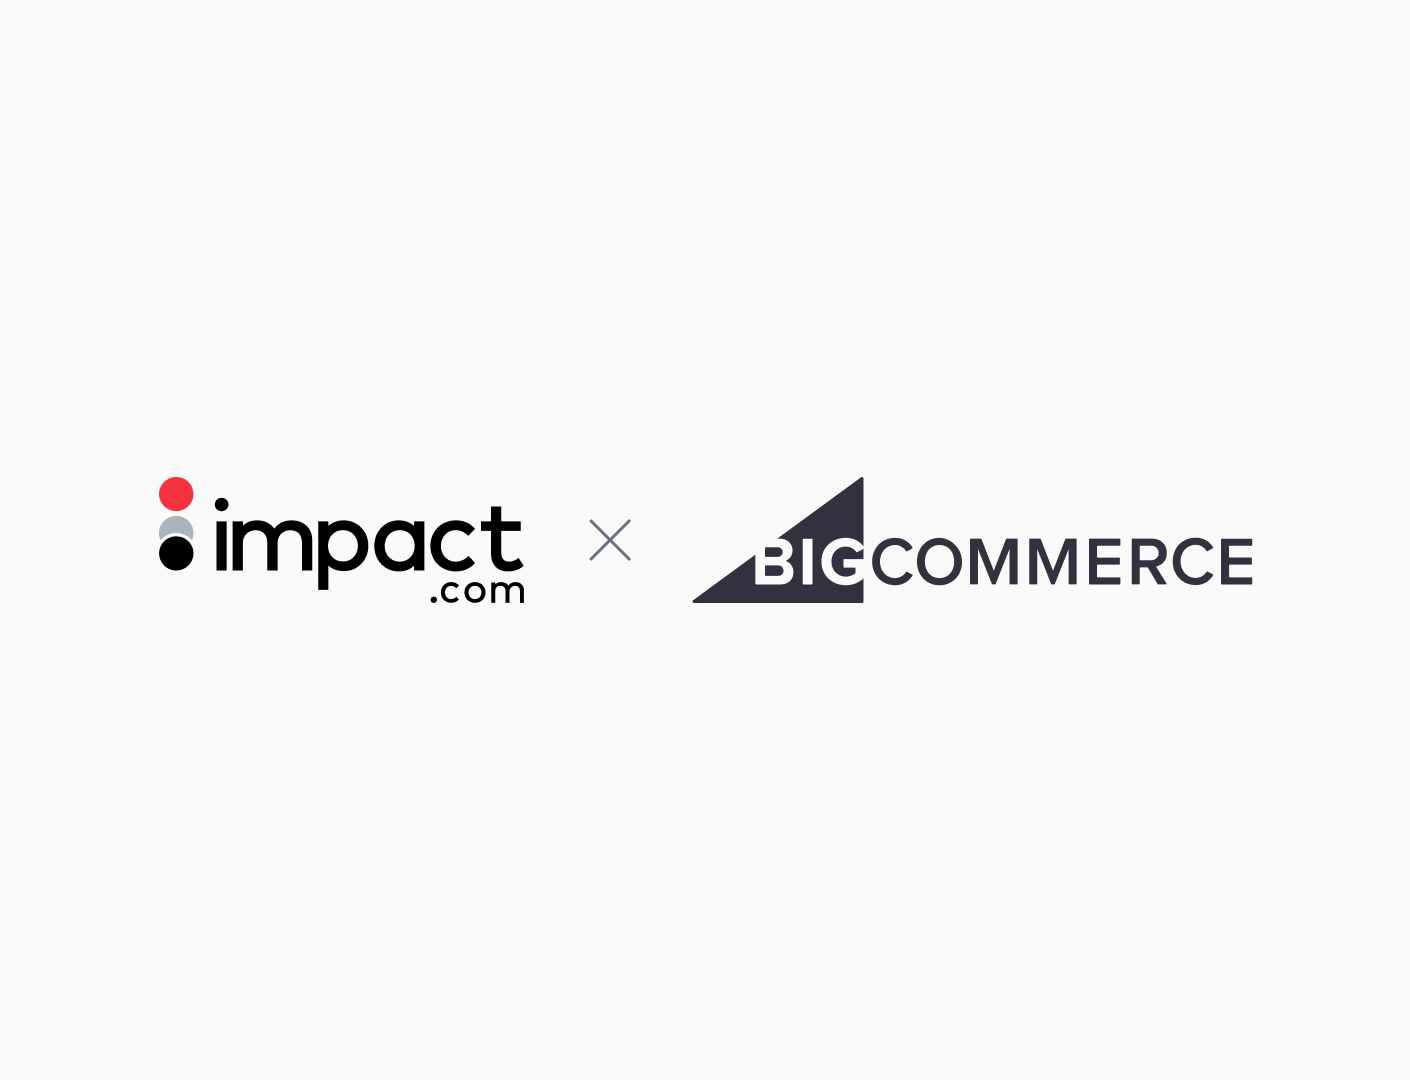 Bigcommerce and impact